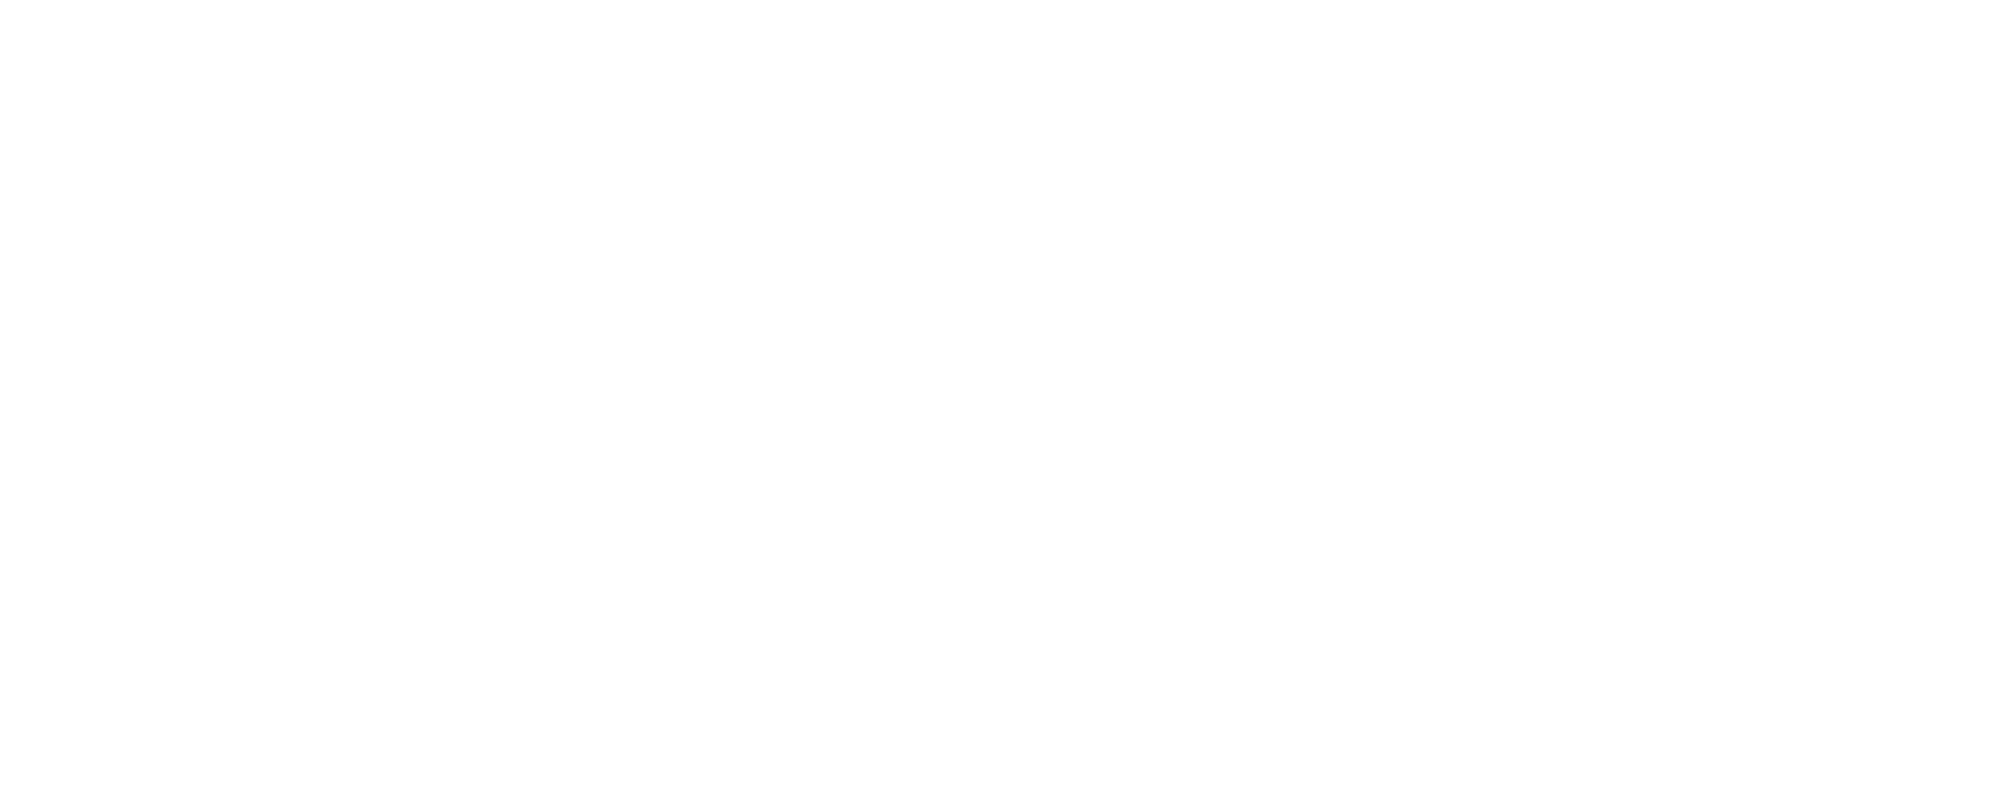 Club Wyndham and Royal Resorts Signature Club Elite logos shown side-by-side.